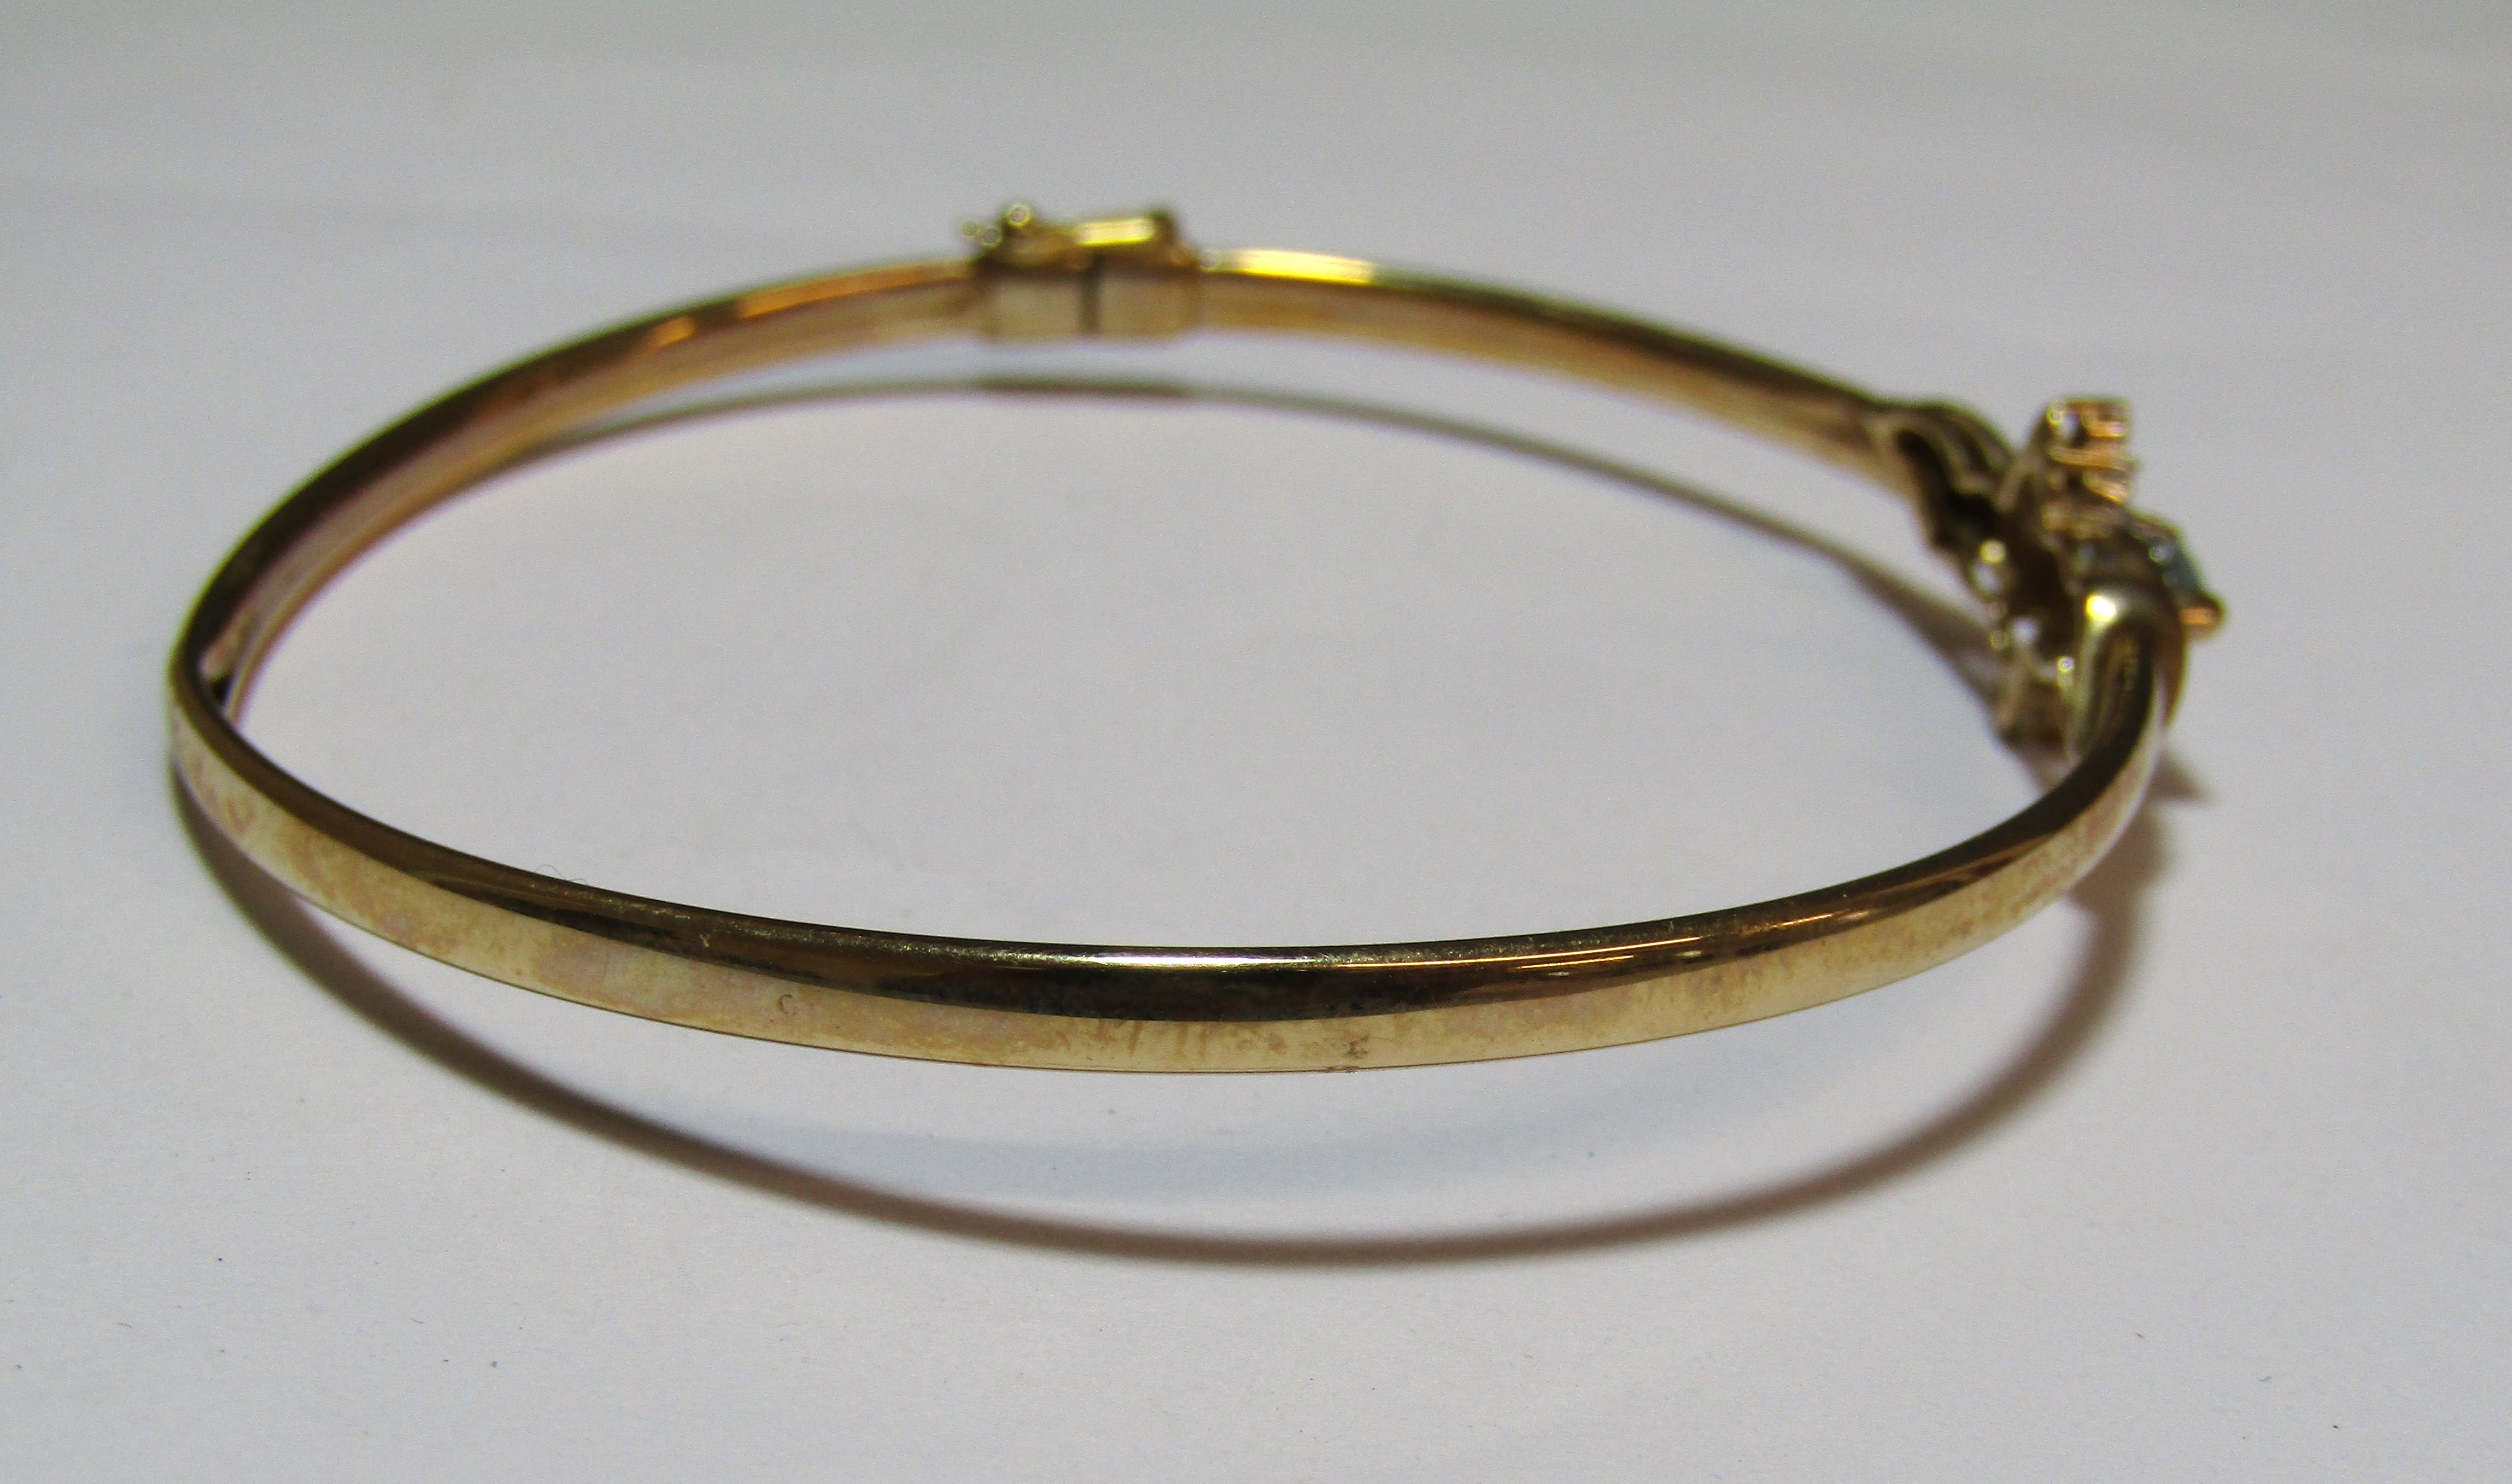 9ct diamond and aquamarine bangle - twist to fit wrist (has caused slight split) - total weight 4. - Image 5 of 8